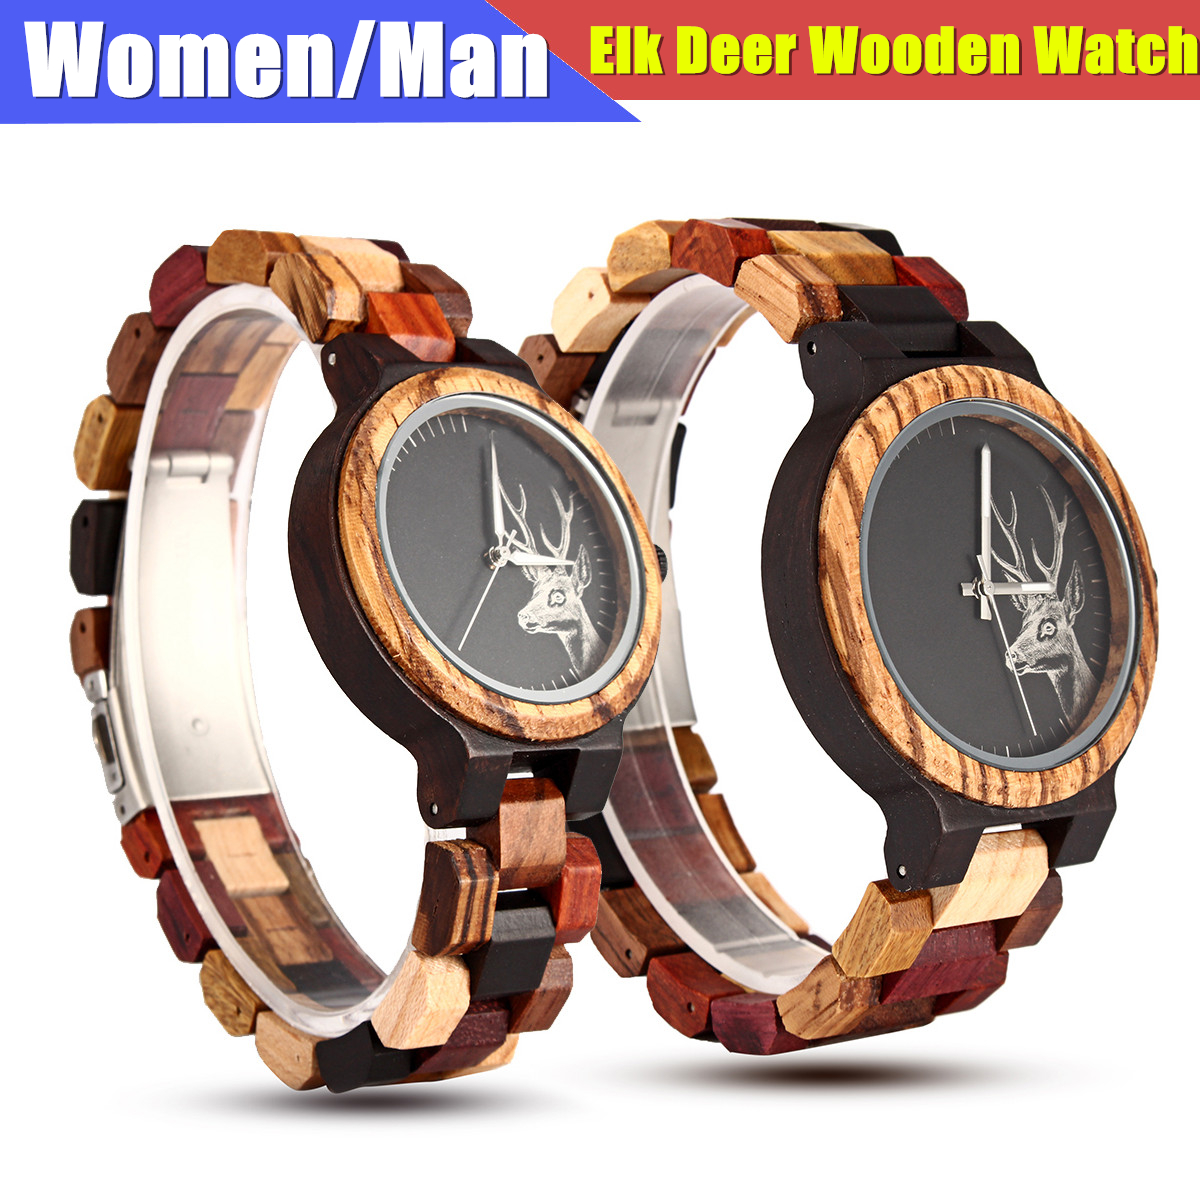 Elk-Deer-Colorful-Wooden-Watch-for-Men-Women-Natural-Wood-Couple-Quartz-Watch-1400692